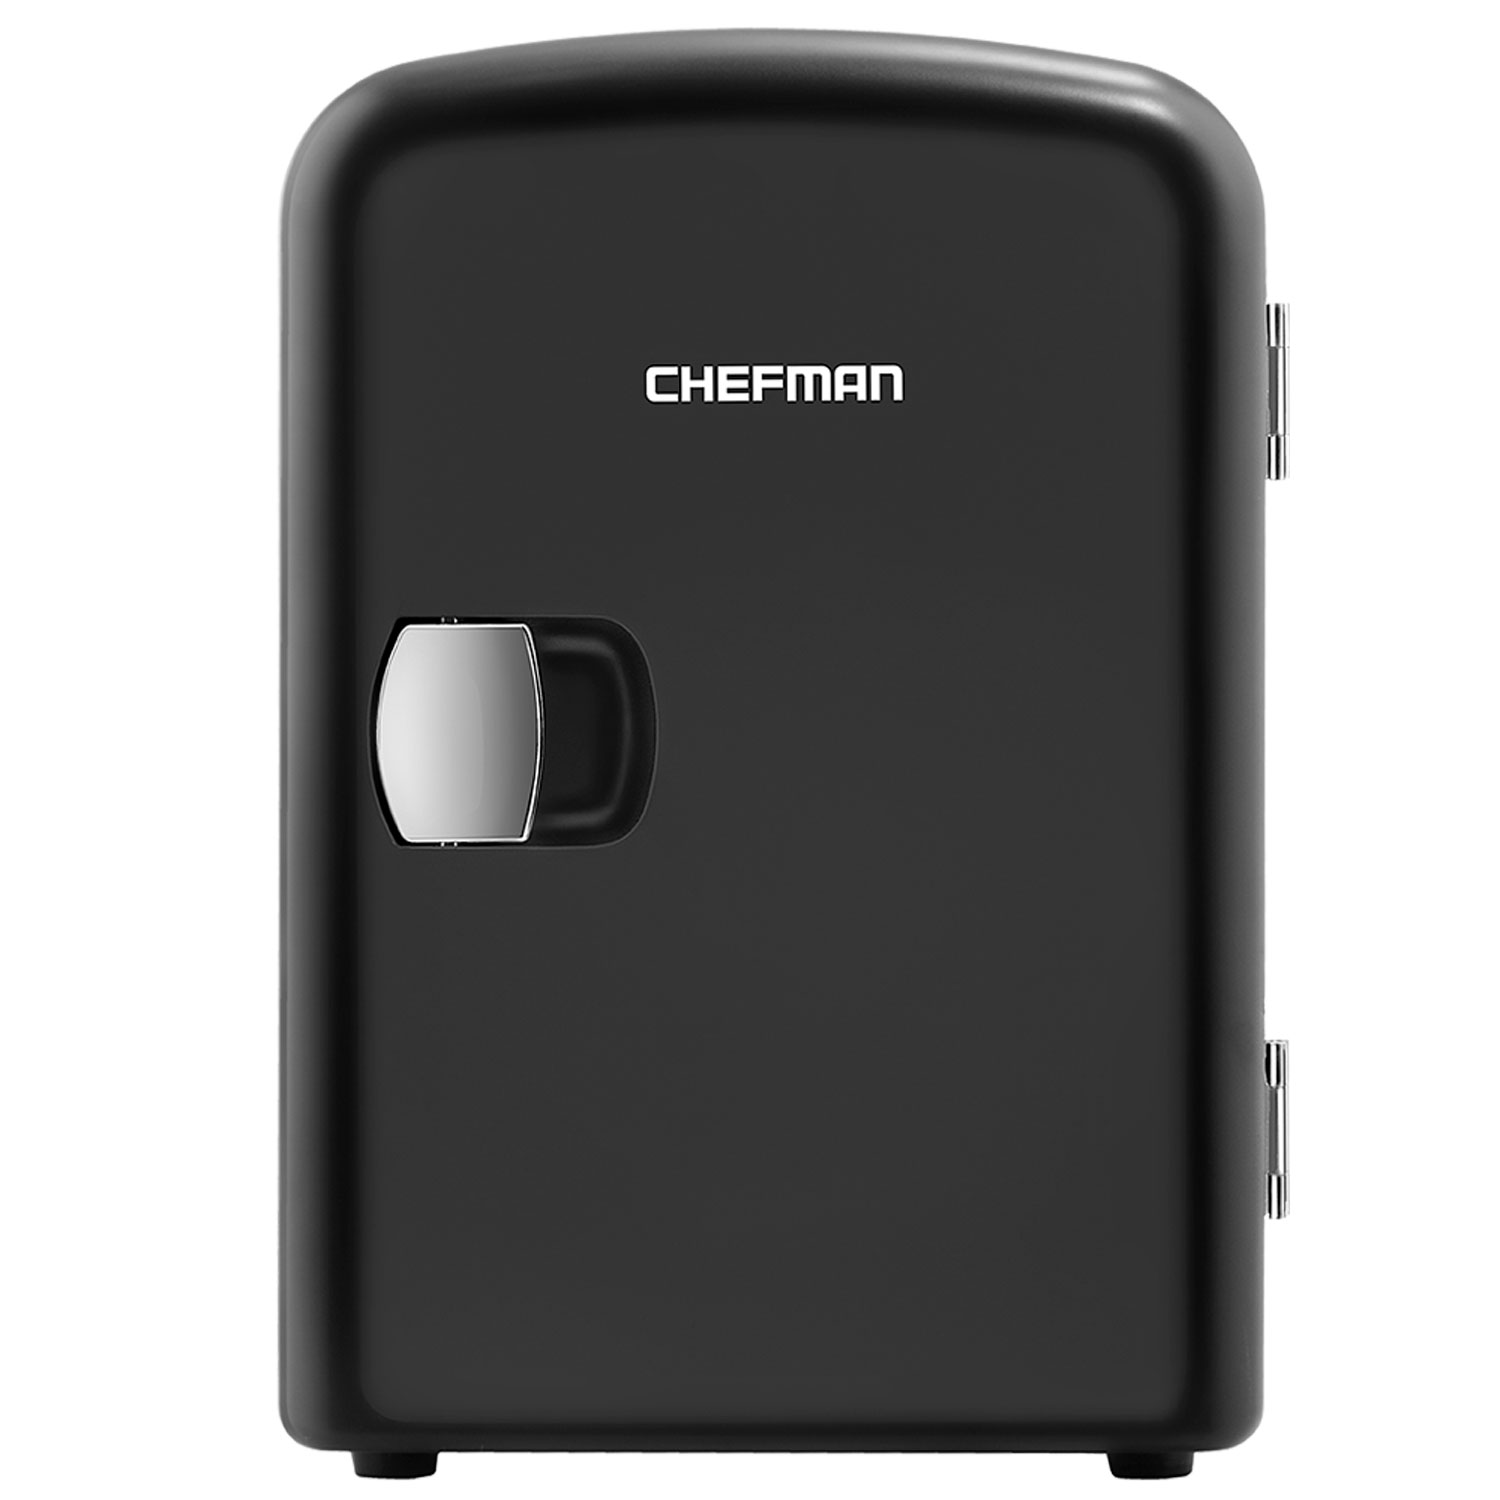 Chefman Portable 4L Mini Fridge w/ Heating and Cooling - Black, New - image 1 of 8